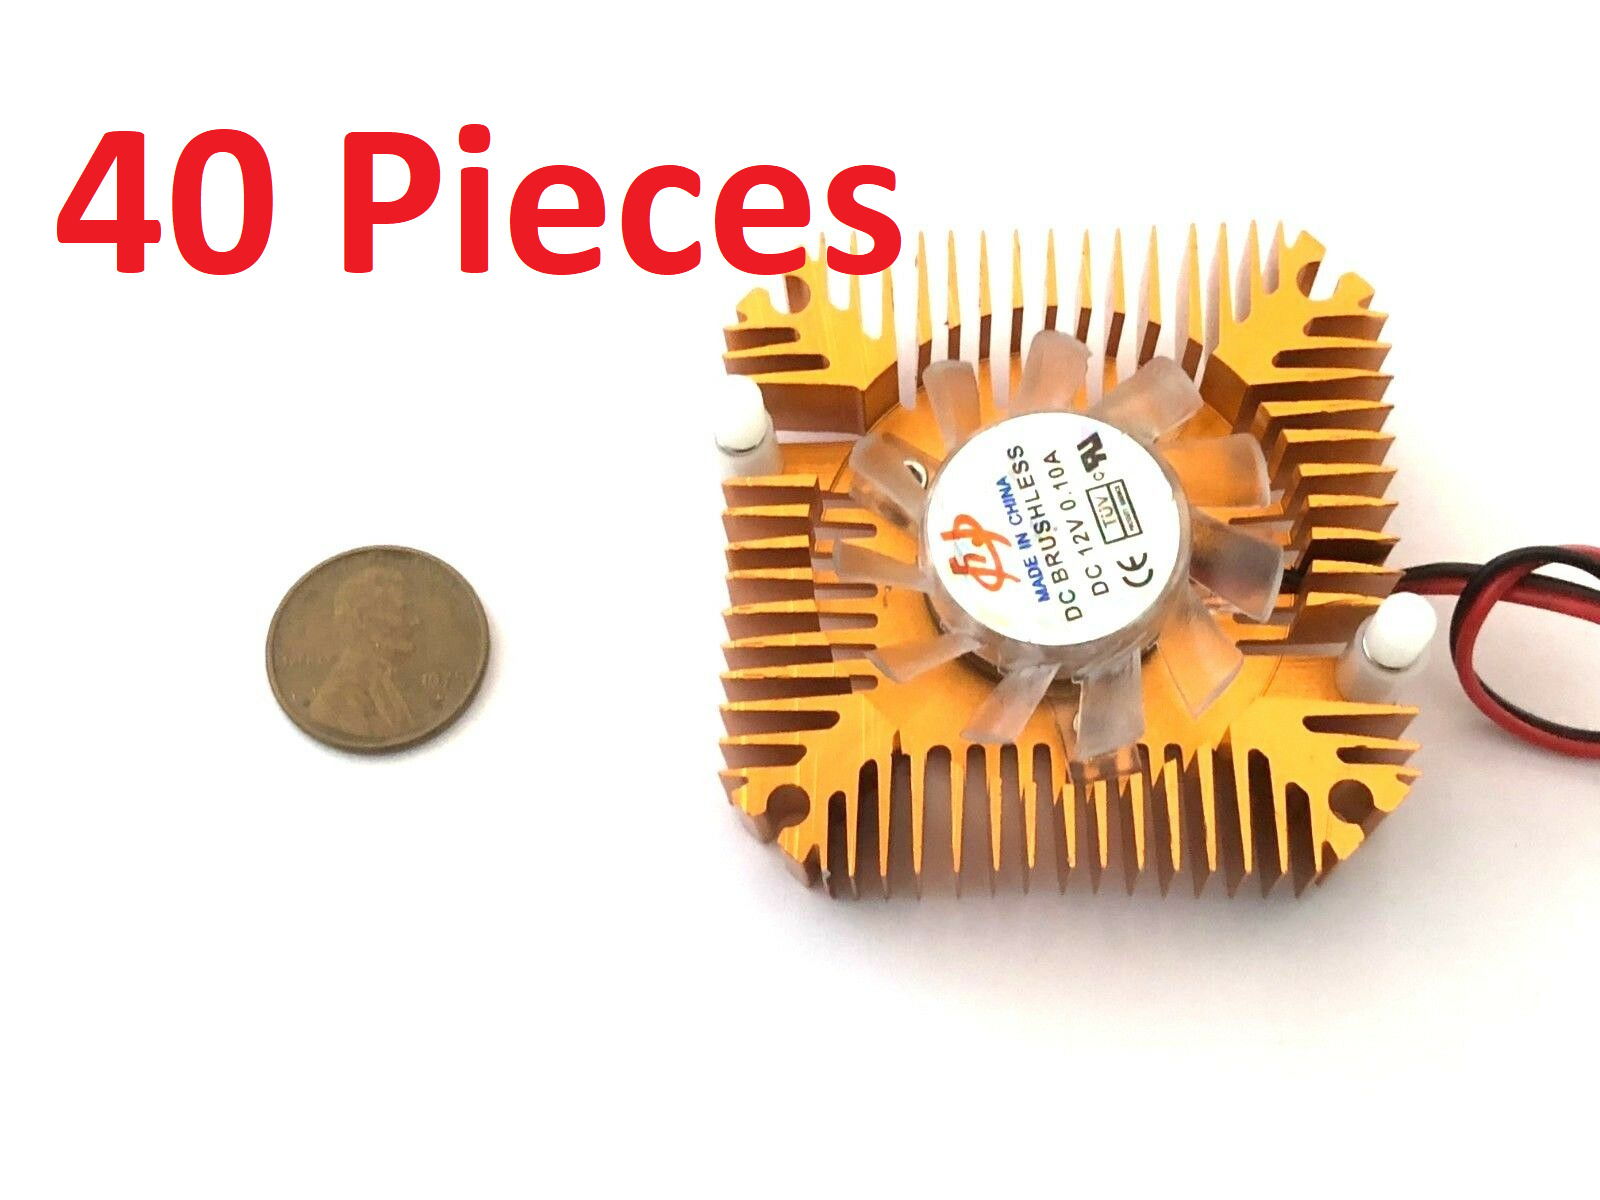 40 Pieces copper 12v 55mm 2PIN Aluminum Cooling Fan Heatsink Cooler VGA CPU